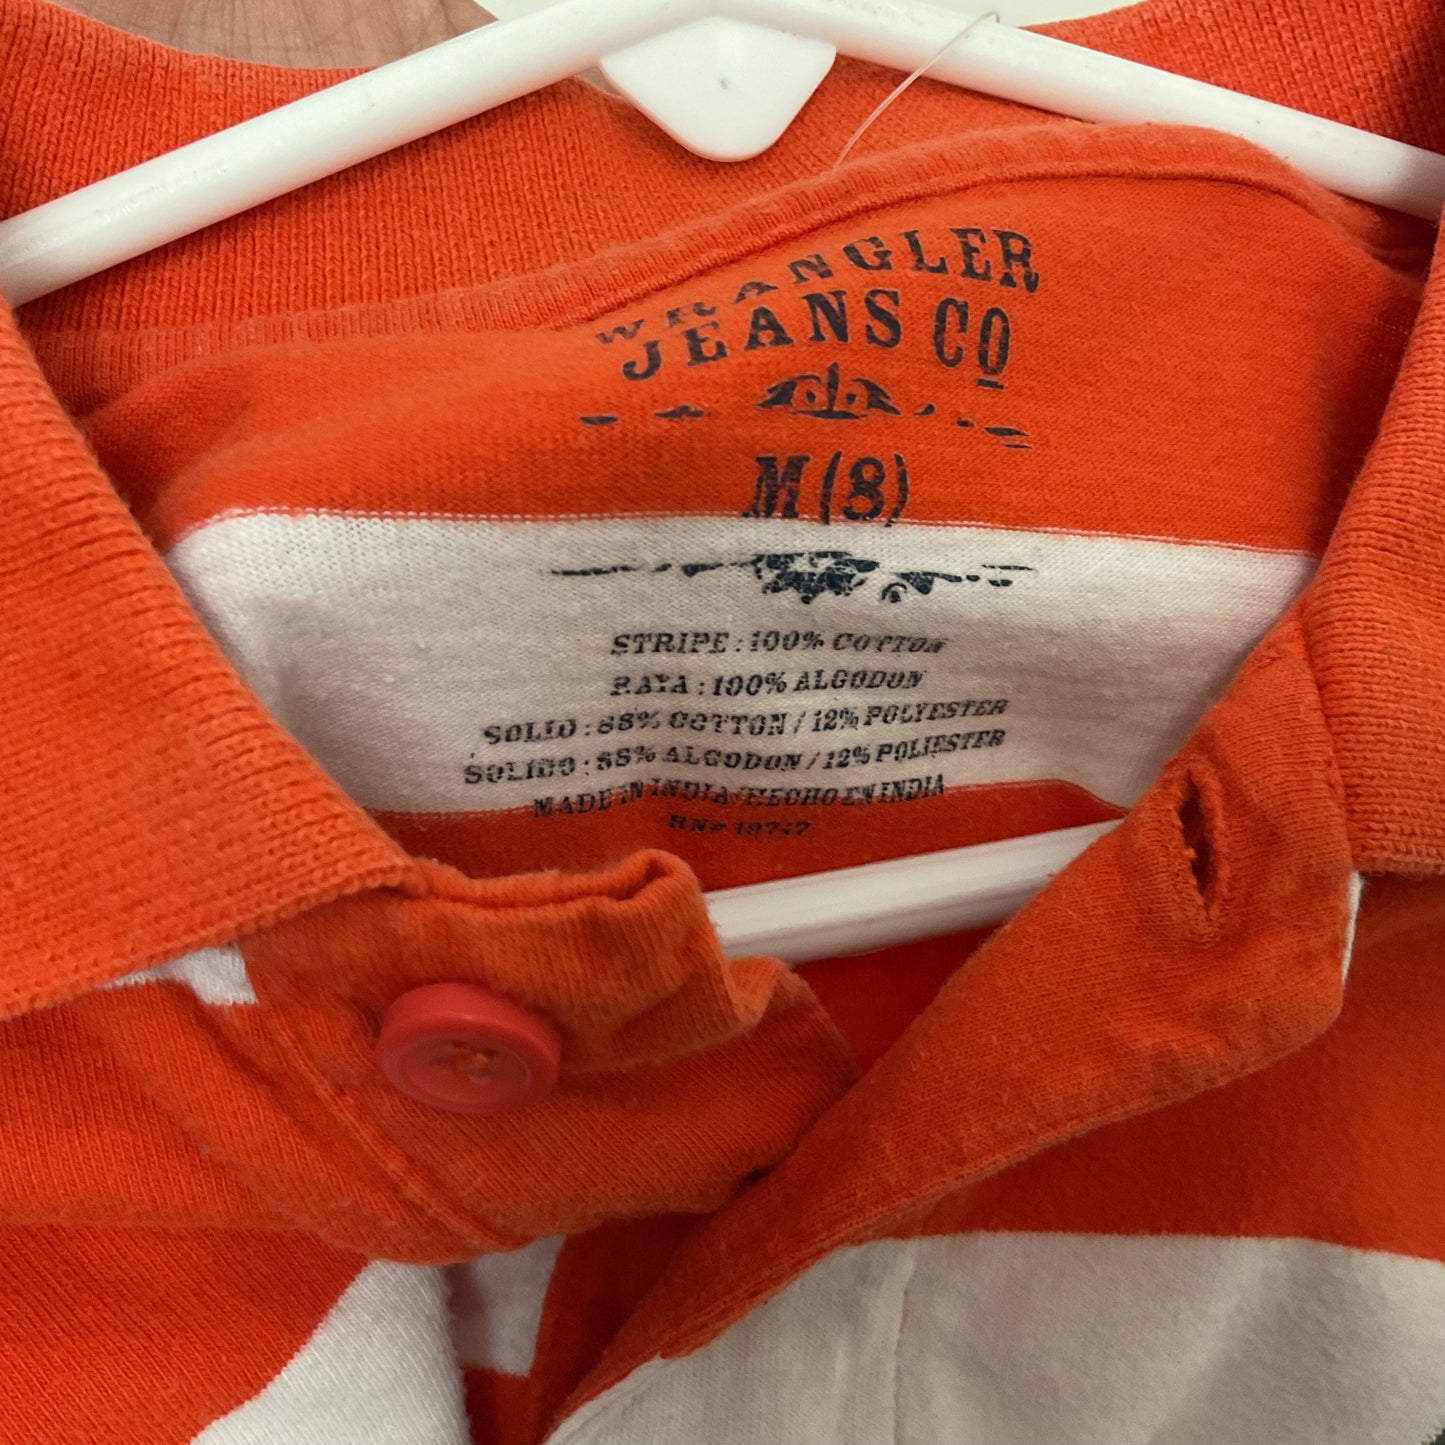 Wrangler Jeans Co. Long Sleeve Polo Shirt Size M(8).